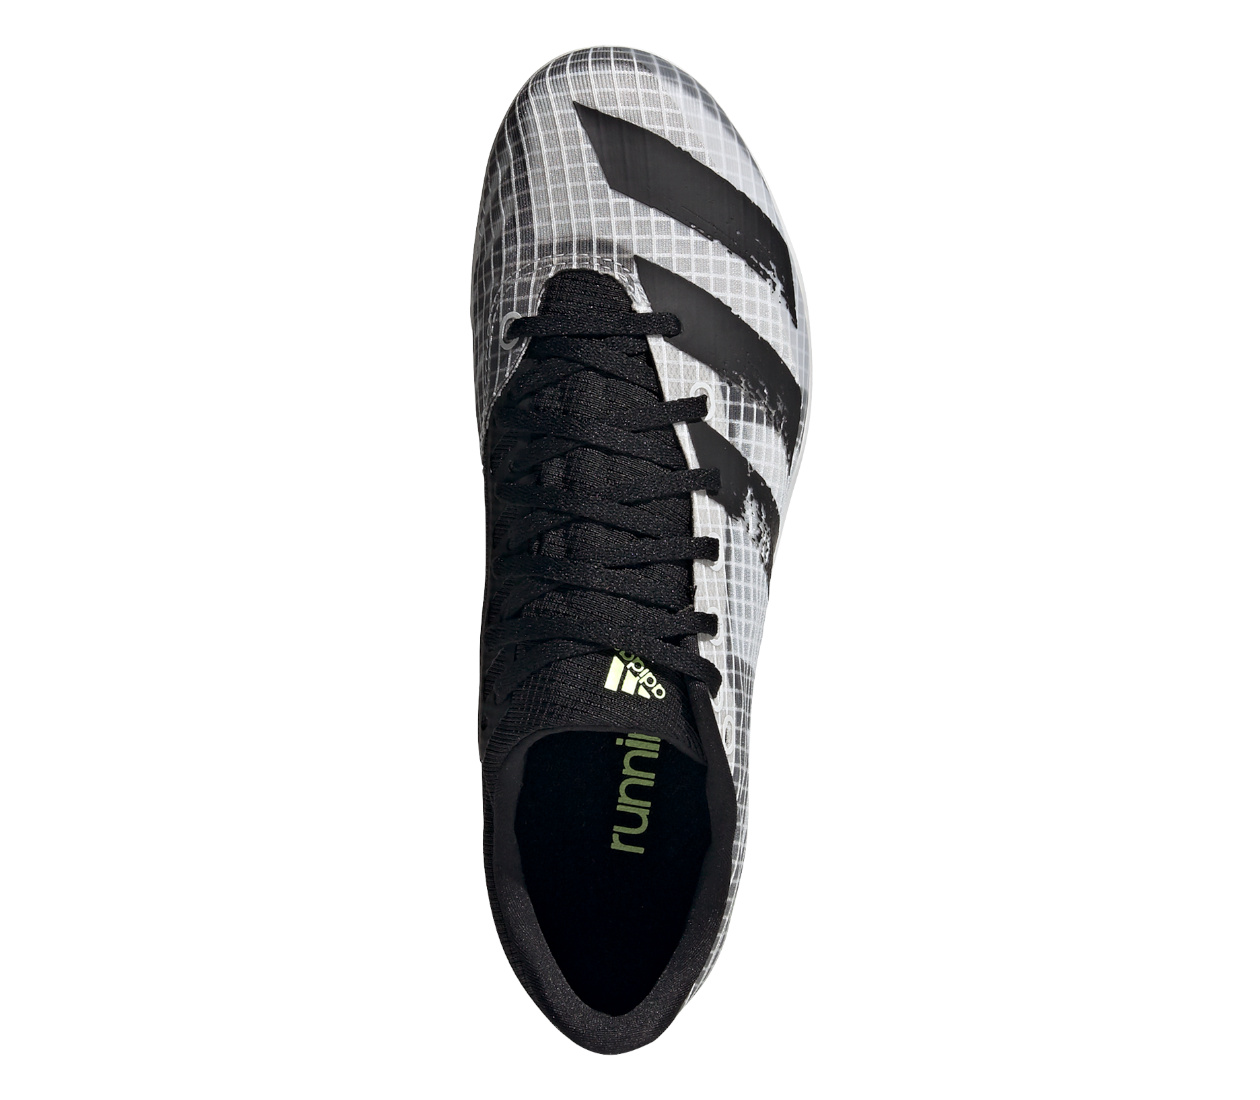 Adidas Distancestar (W) scarpa per mezzofondo su pista | LBM Sport